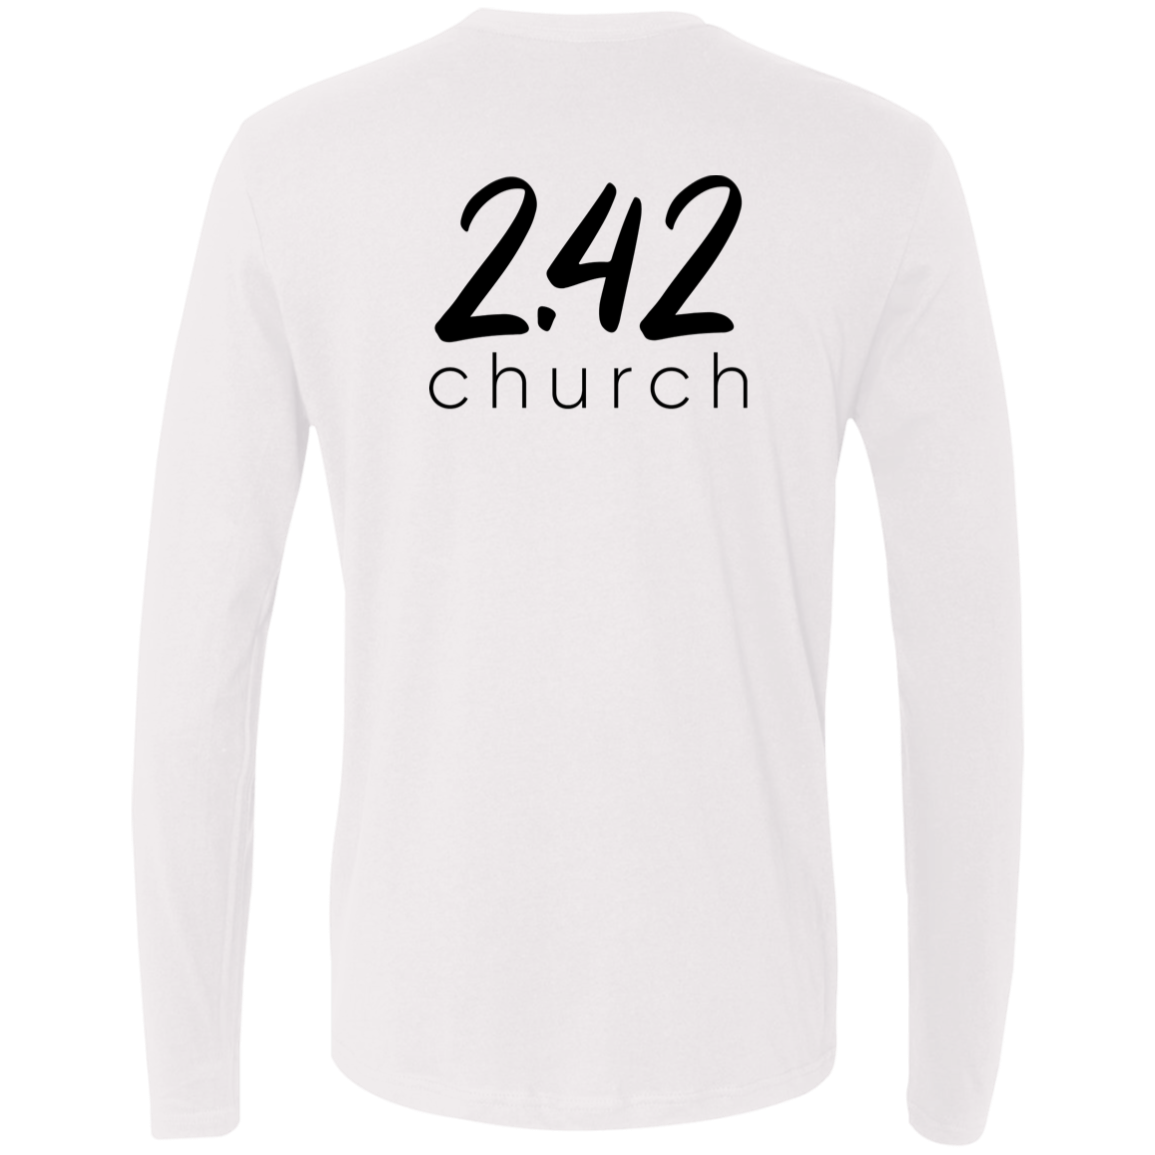 2.42 Church Long Sleeves